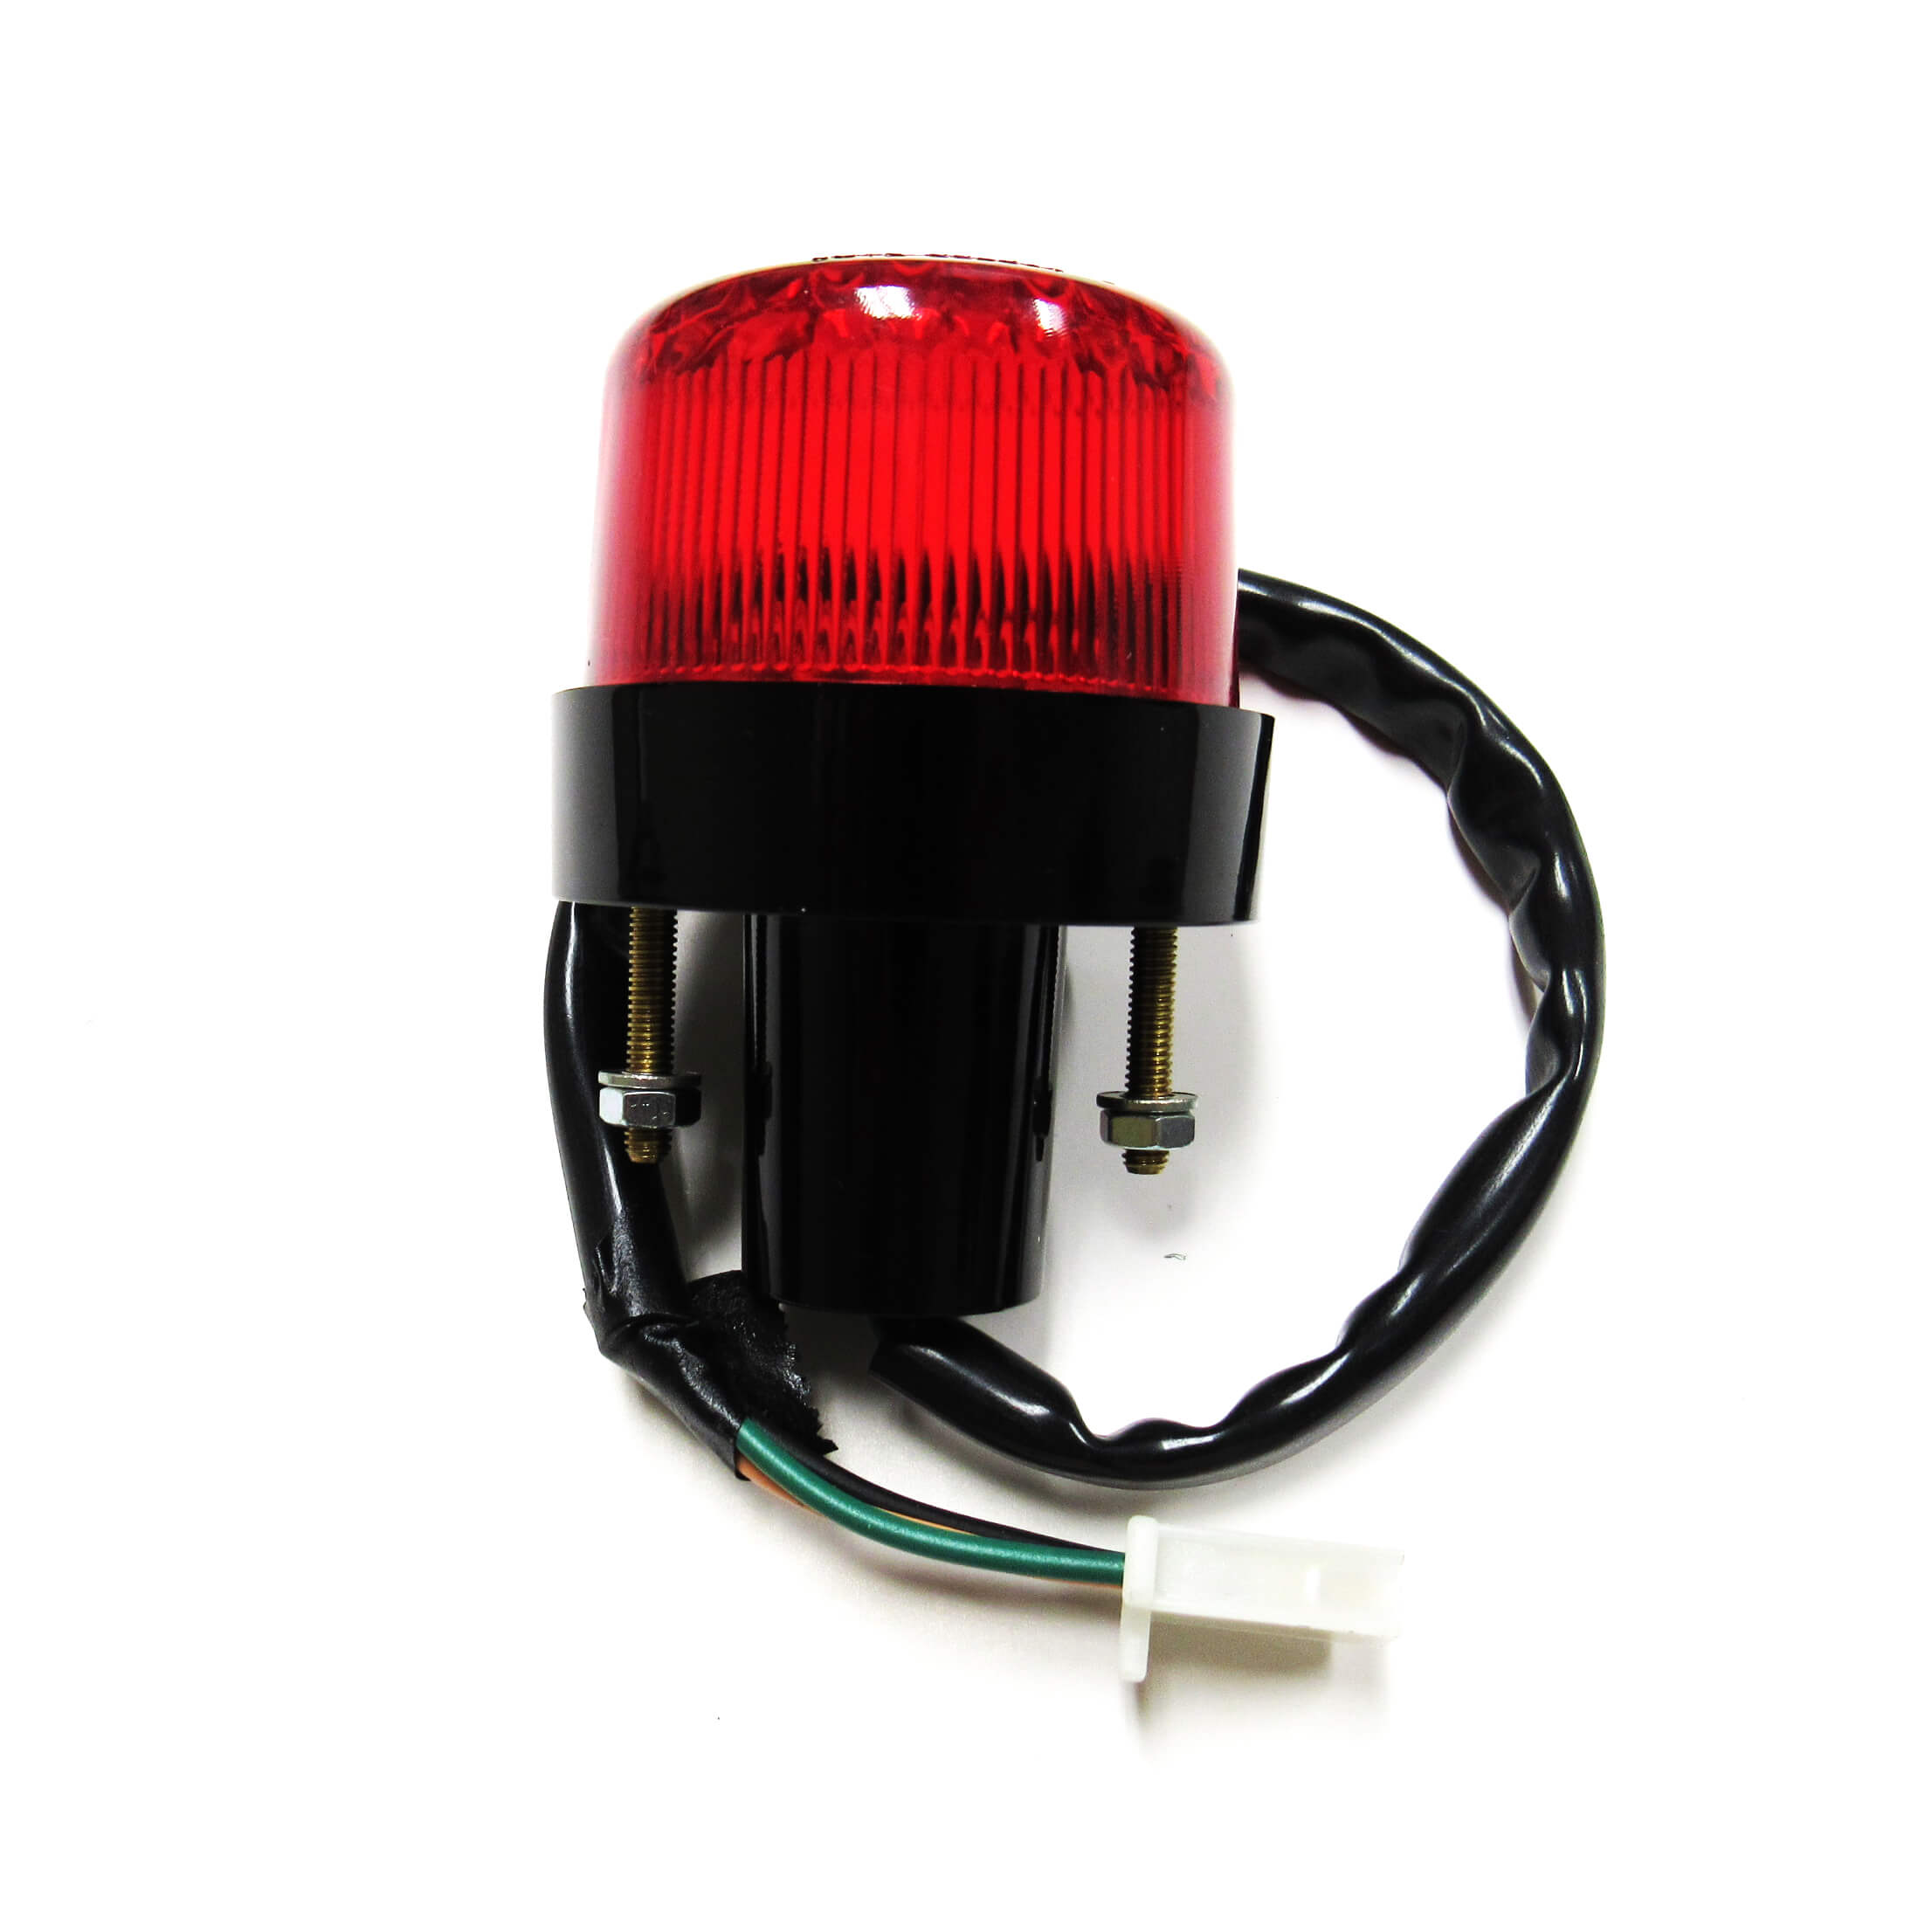 Tail Light (ATV) Fits E-Ton Viper RXL50, RXL70, RXL90R, RX4-70, RX4-90R ATVs